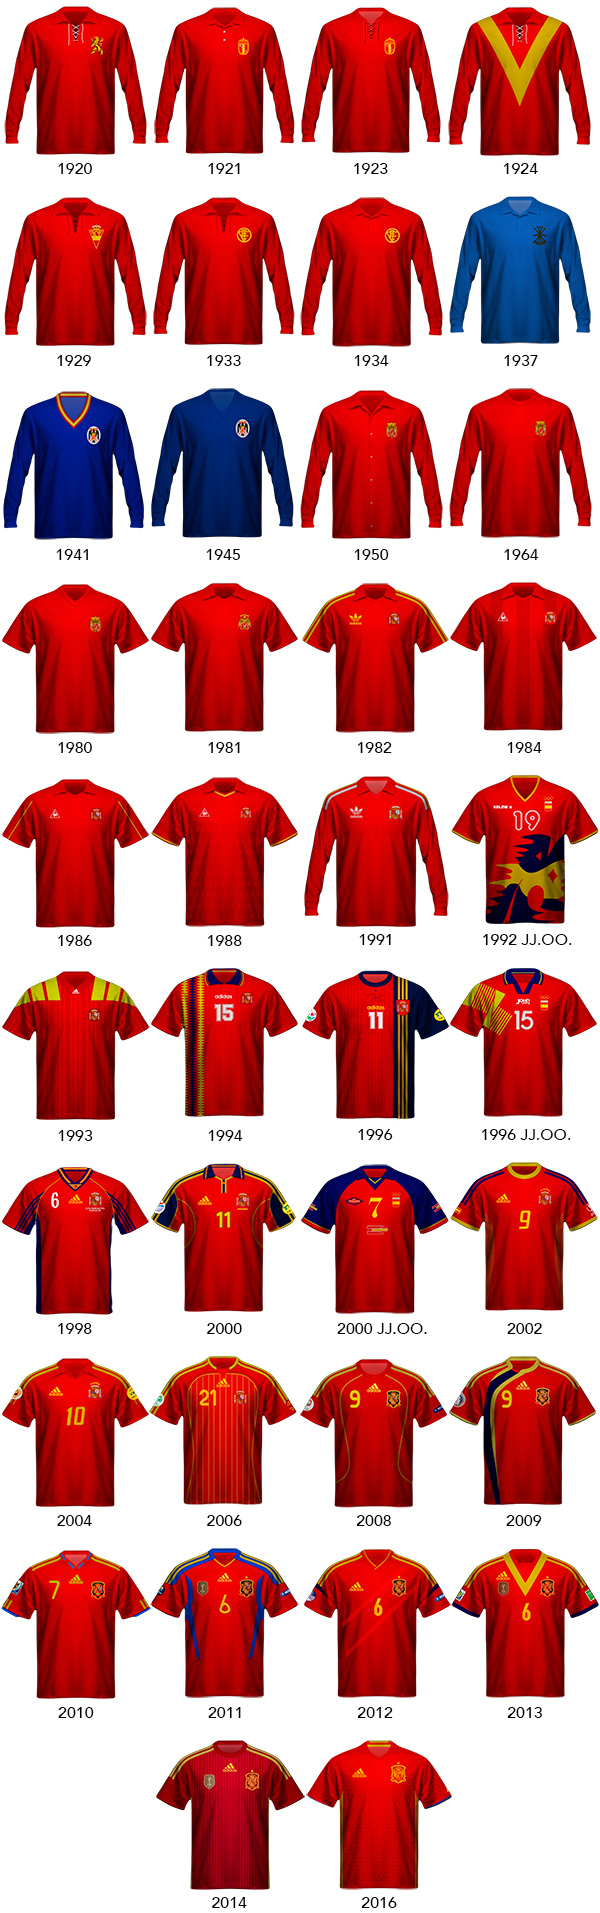 Selección Española: Desde 1920 luciendo camisetas